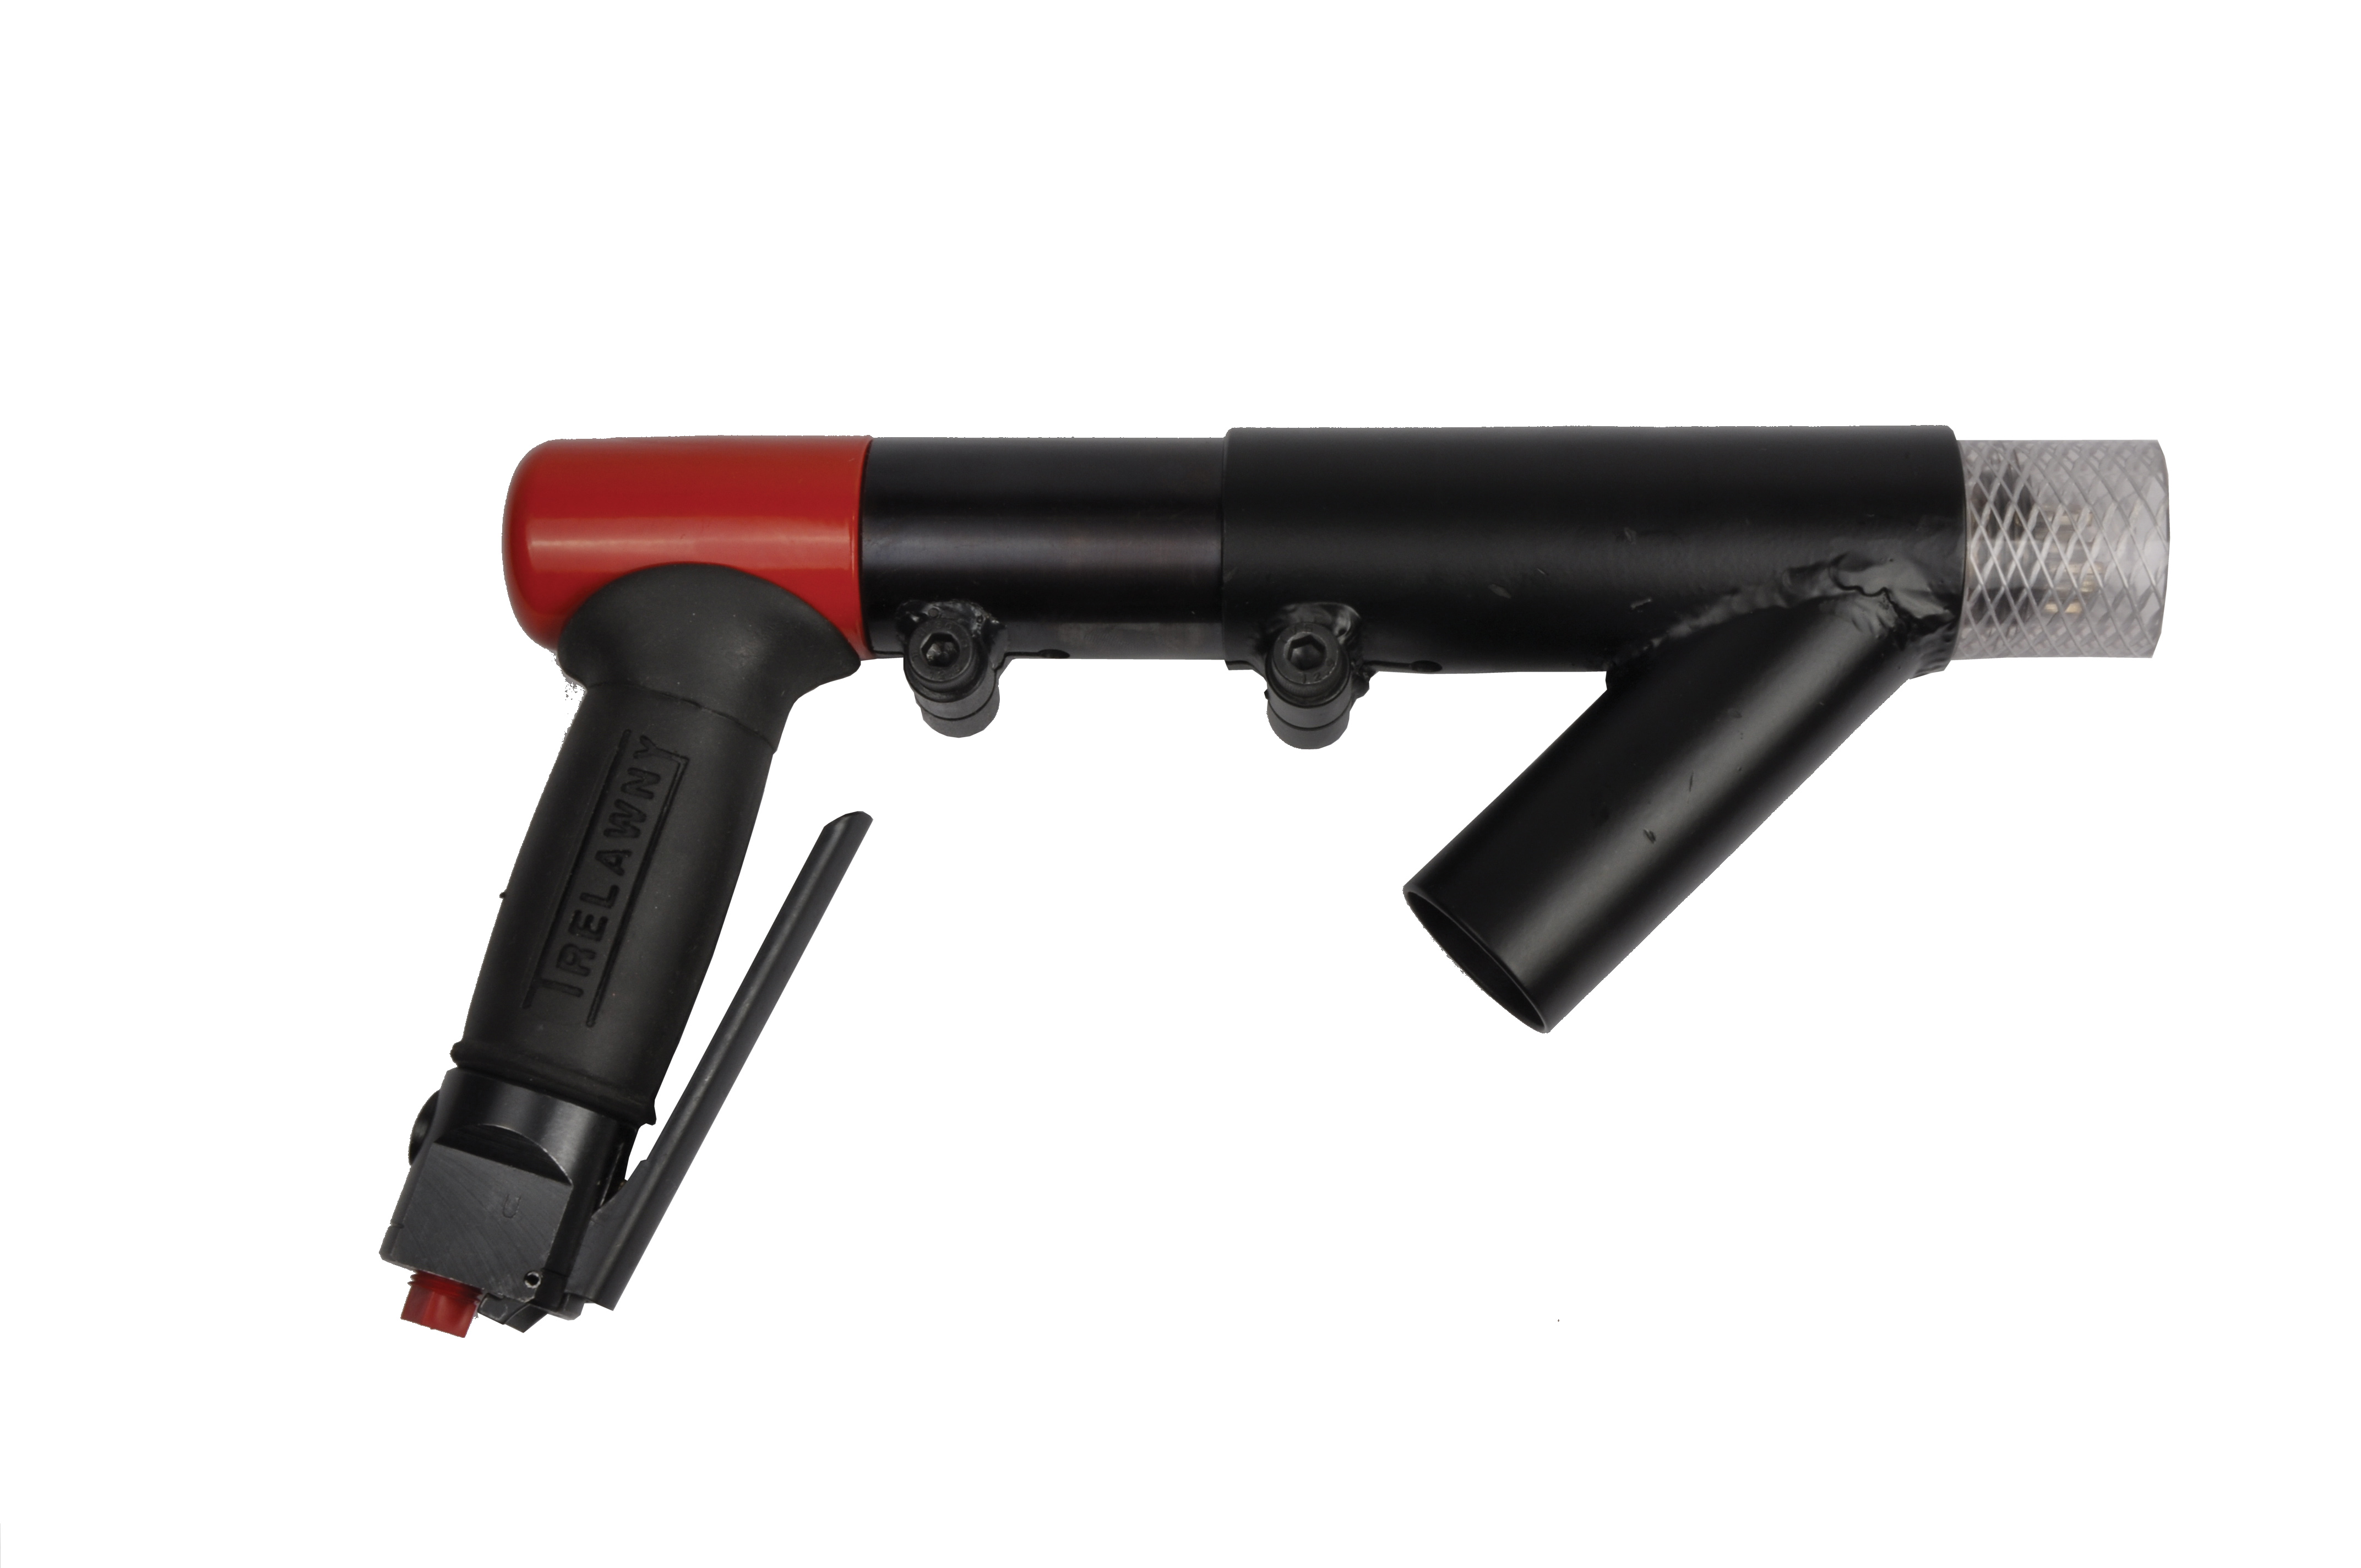 2BPG TVS Needle Gun - Chisel Scaler - Pistol Grip